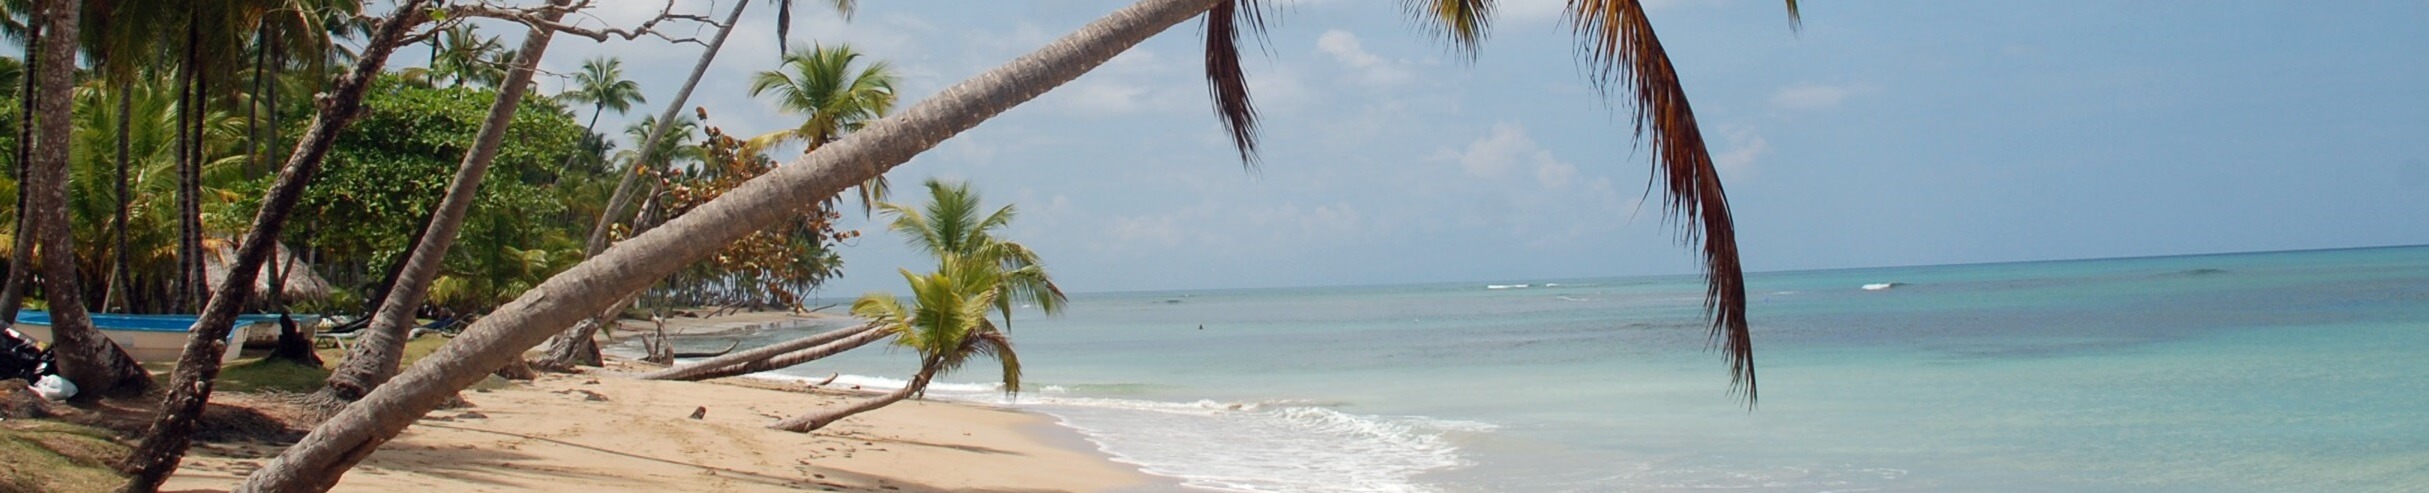 2nd best beaches in Dominican Republic-Playa Bonita